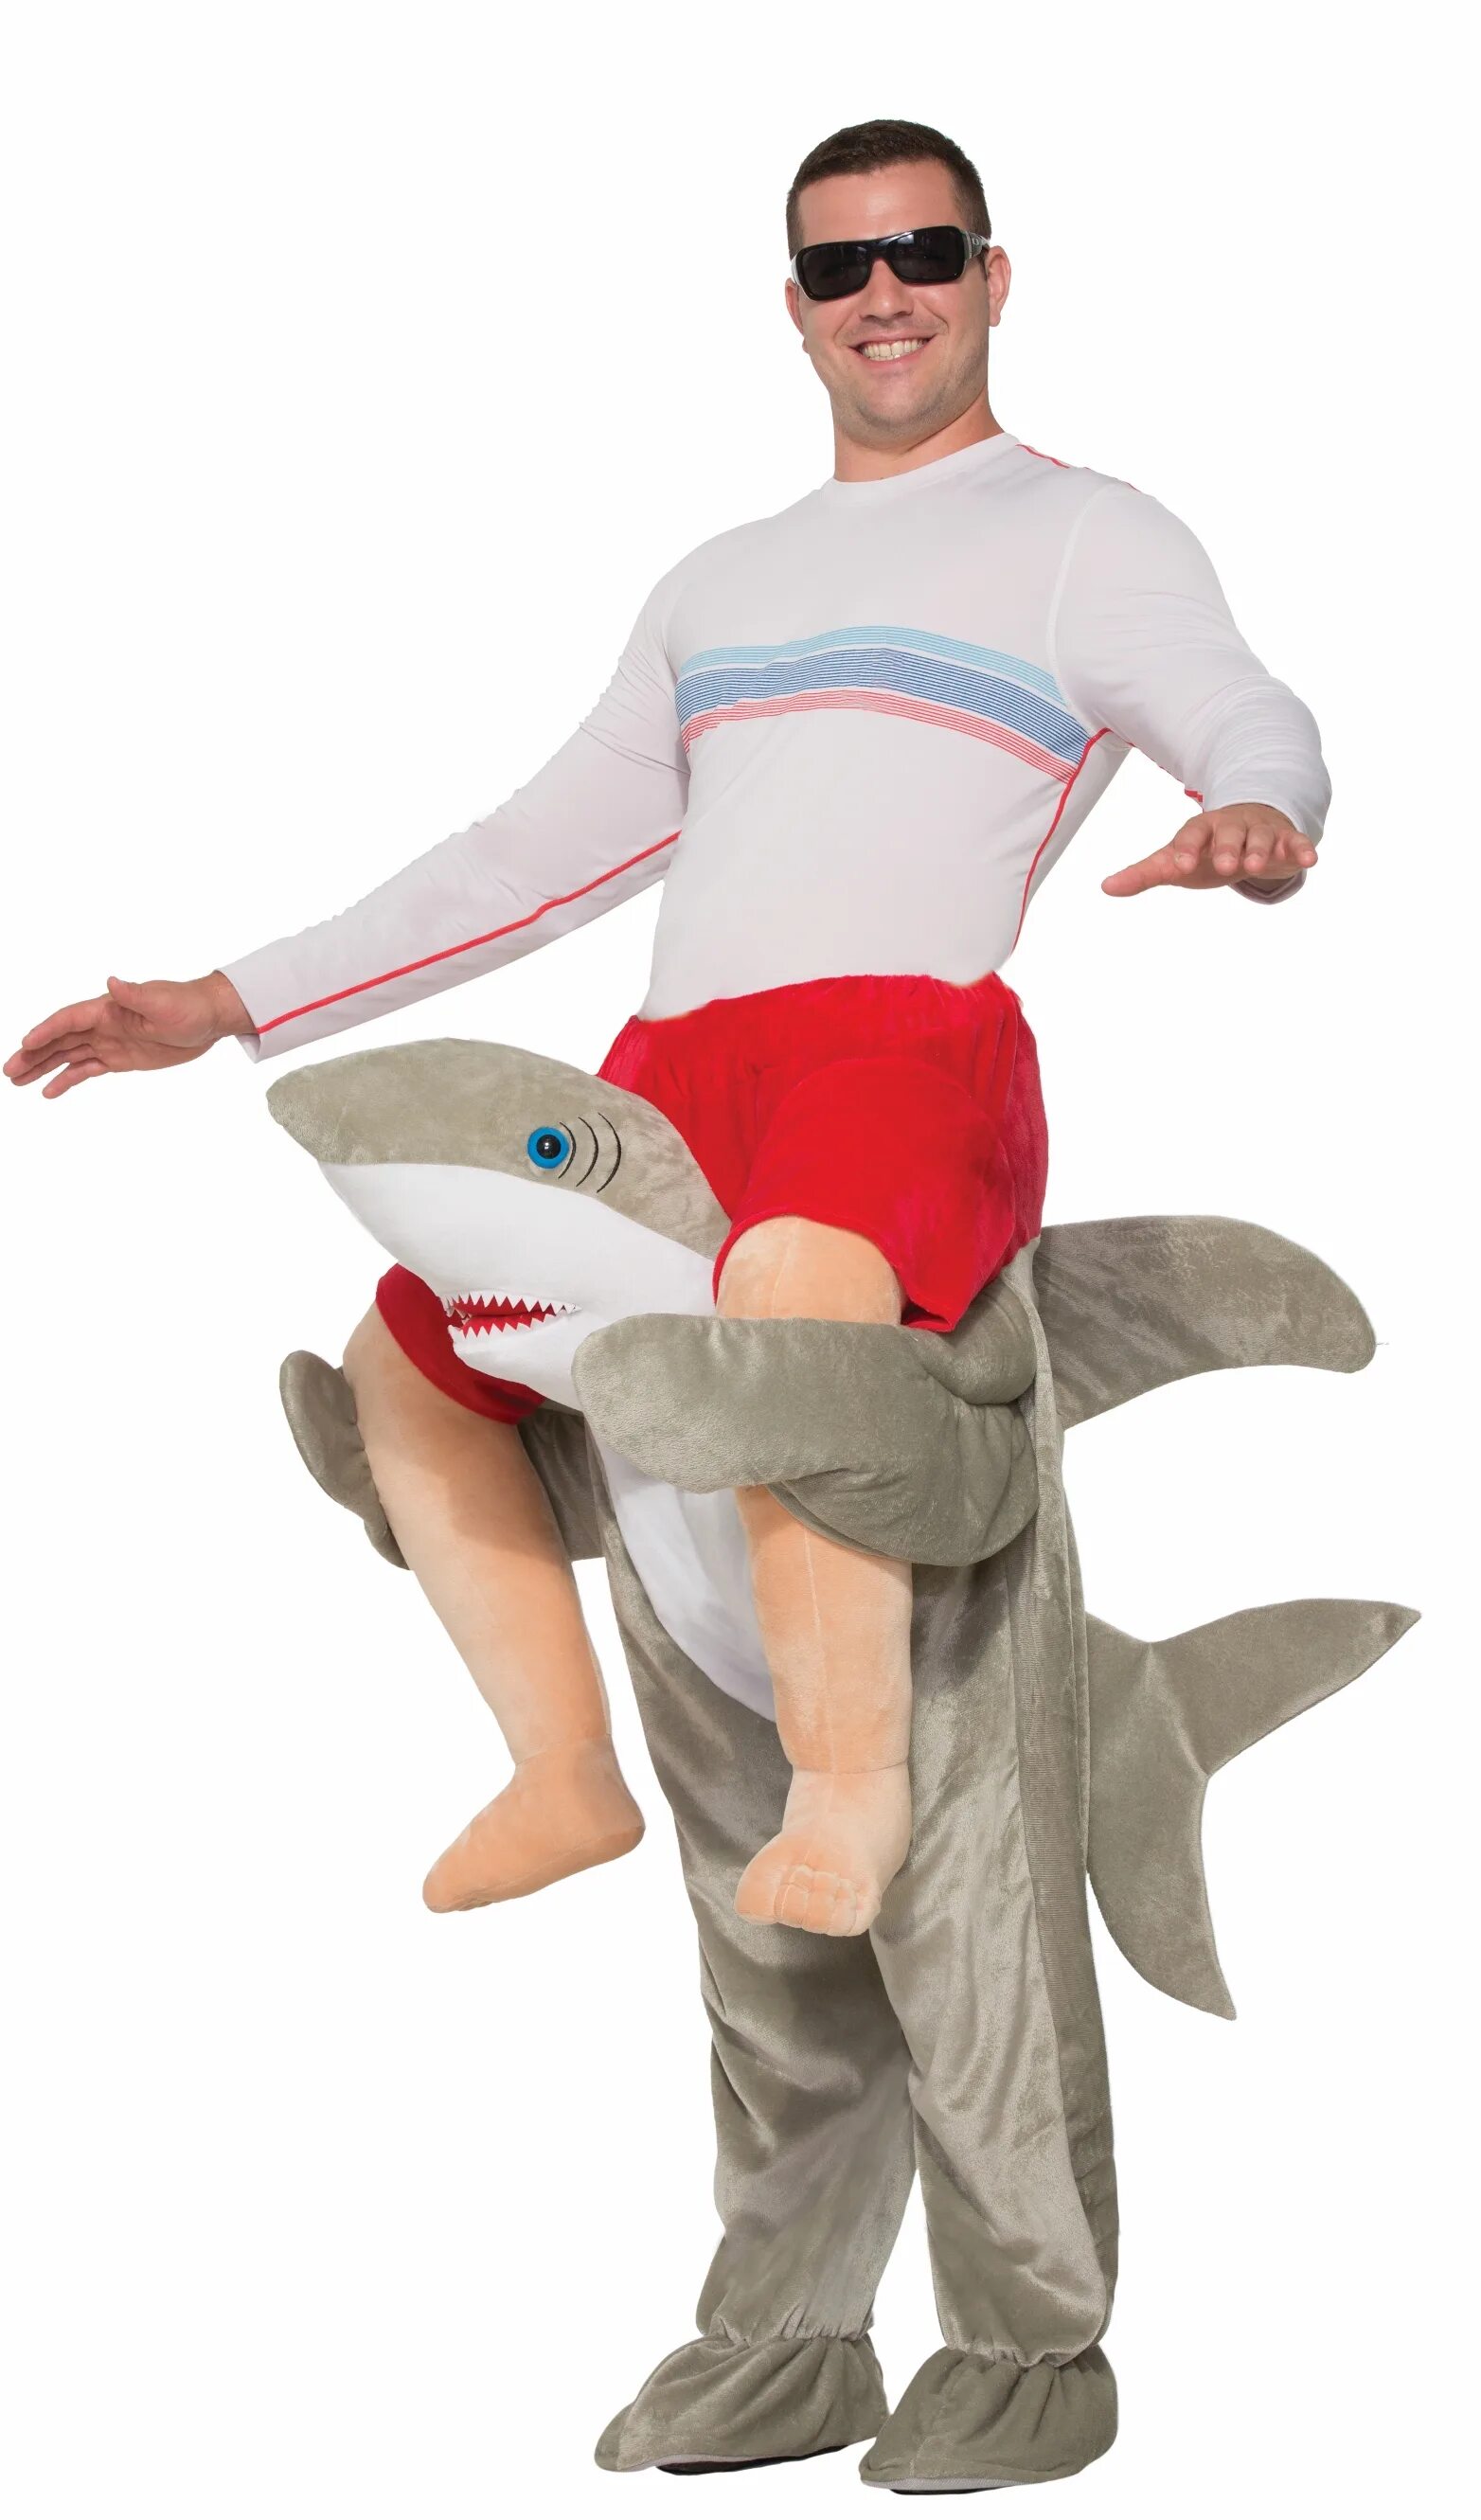 Акула олень. Костюм акулы. Костюм акулы взрослый. Карнавальный костюм акула. Человек в костюме акулы.